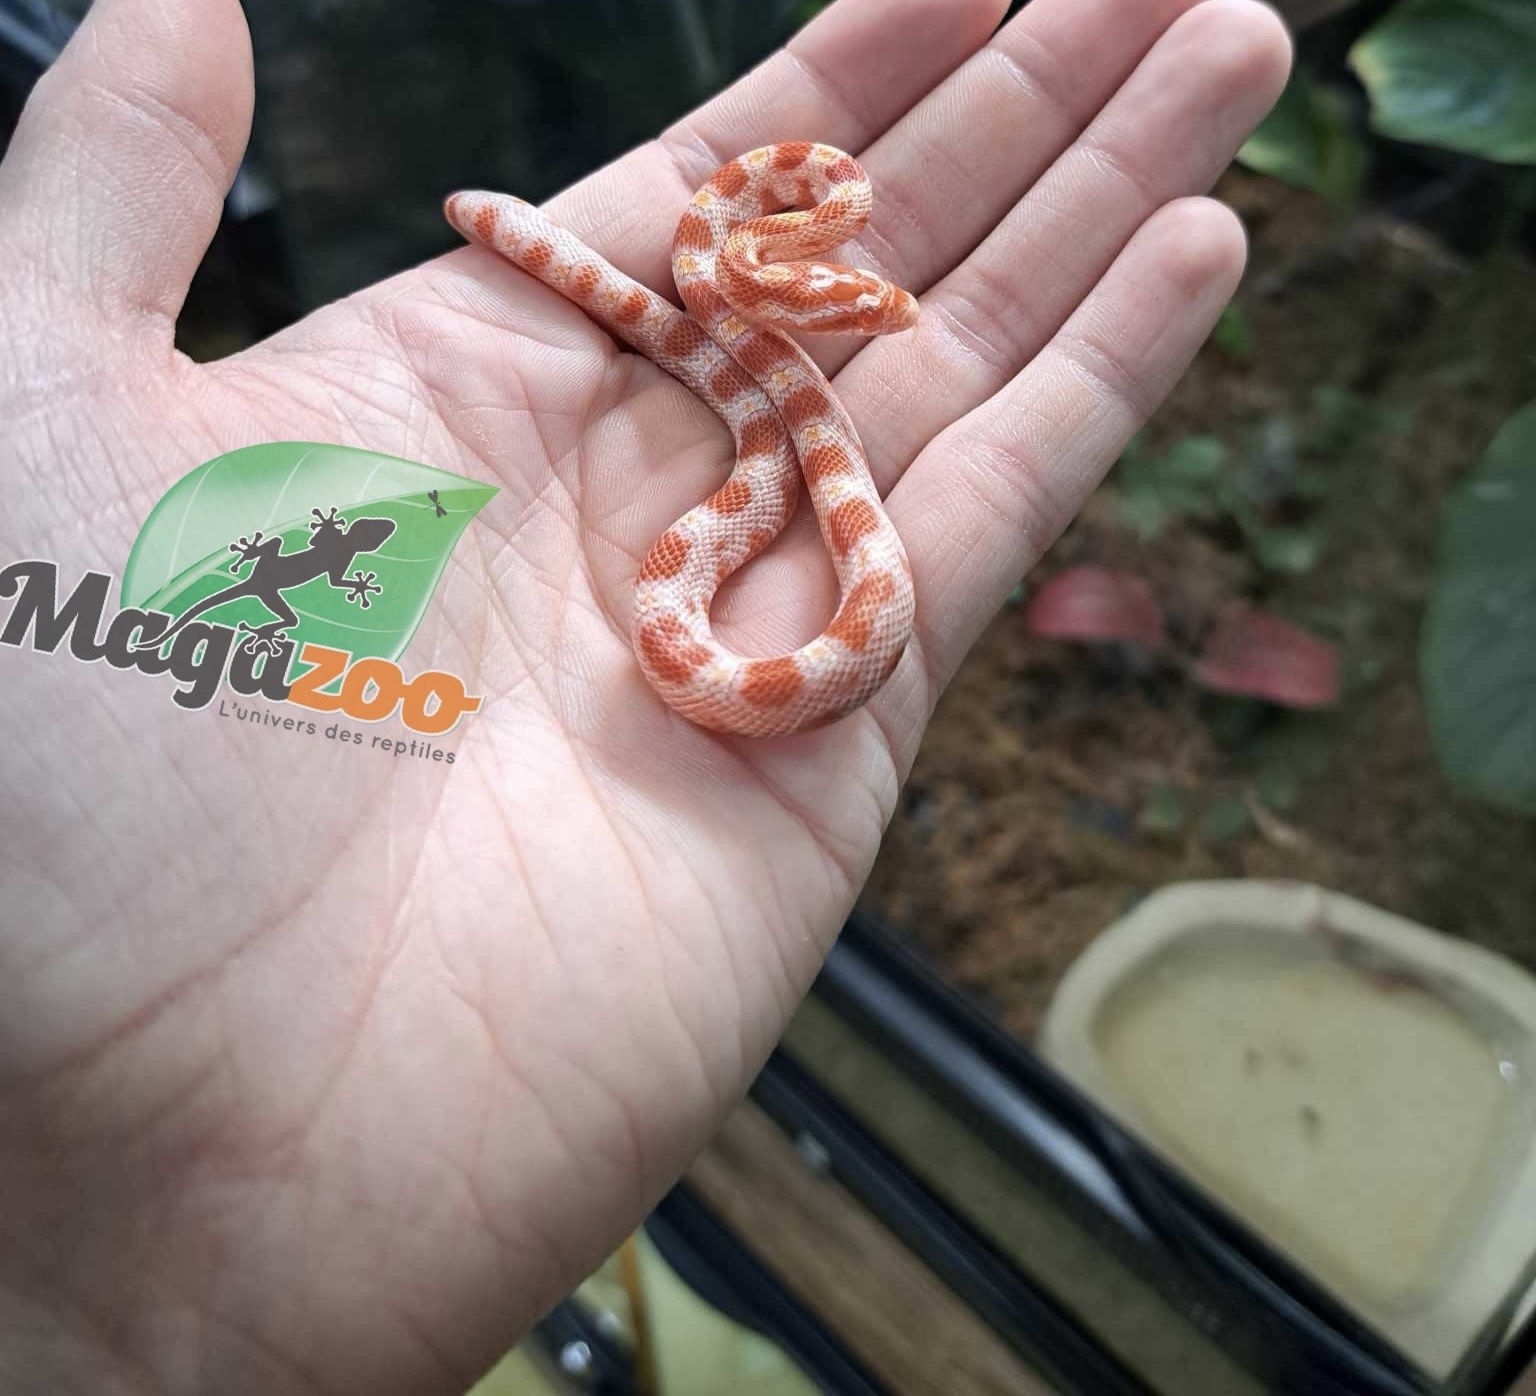 Magazoo Serpent des Blés Albino (Candy cane) Femelle Bébé #3